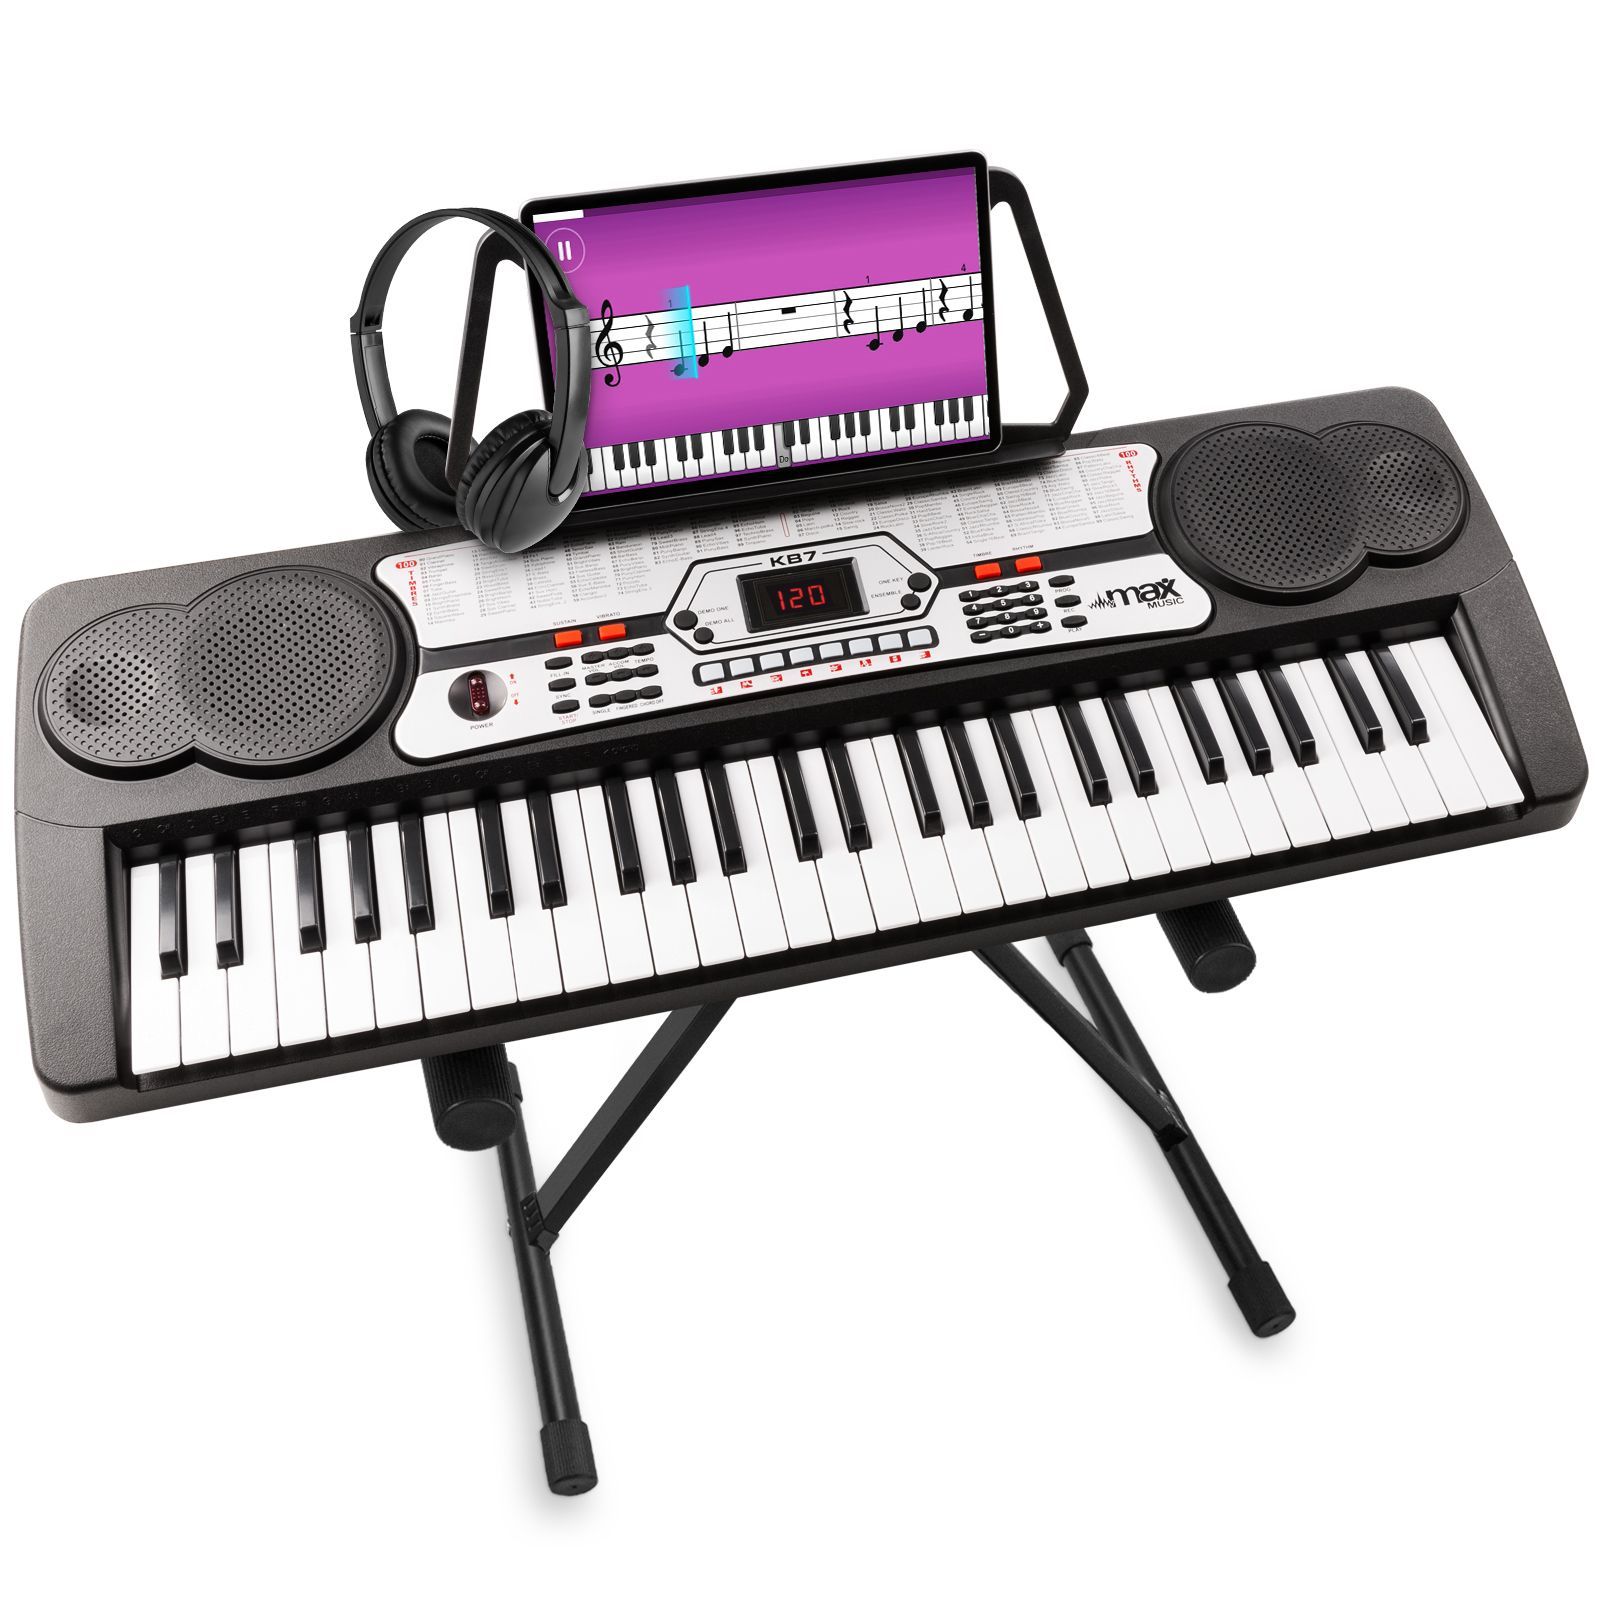 Keyboard piano - MAX KB7 keyboard met 54 toetsen, keyboard standaard en koptelefoon - Perfect instapmodel - Zwart